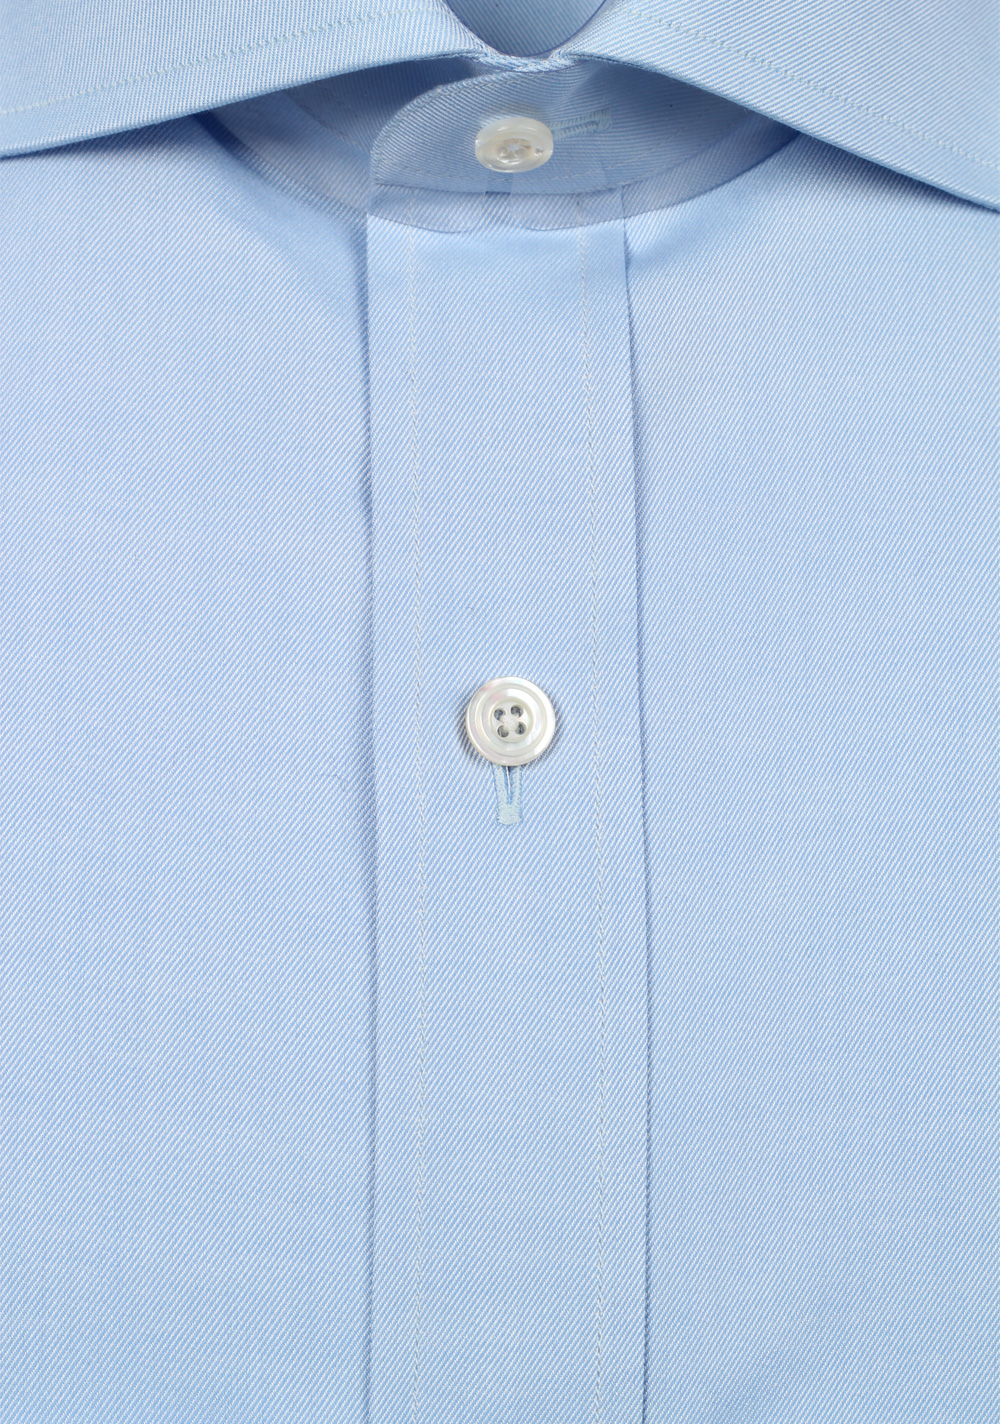 TOM FORD Solid Blue Shirt Size 40 / 15,75 U.S. | Costume Limité